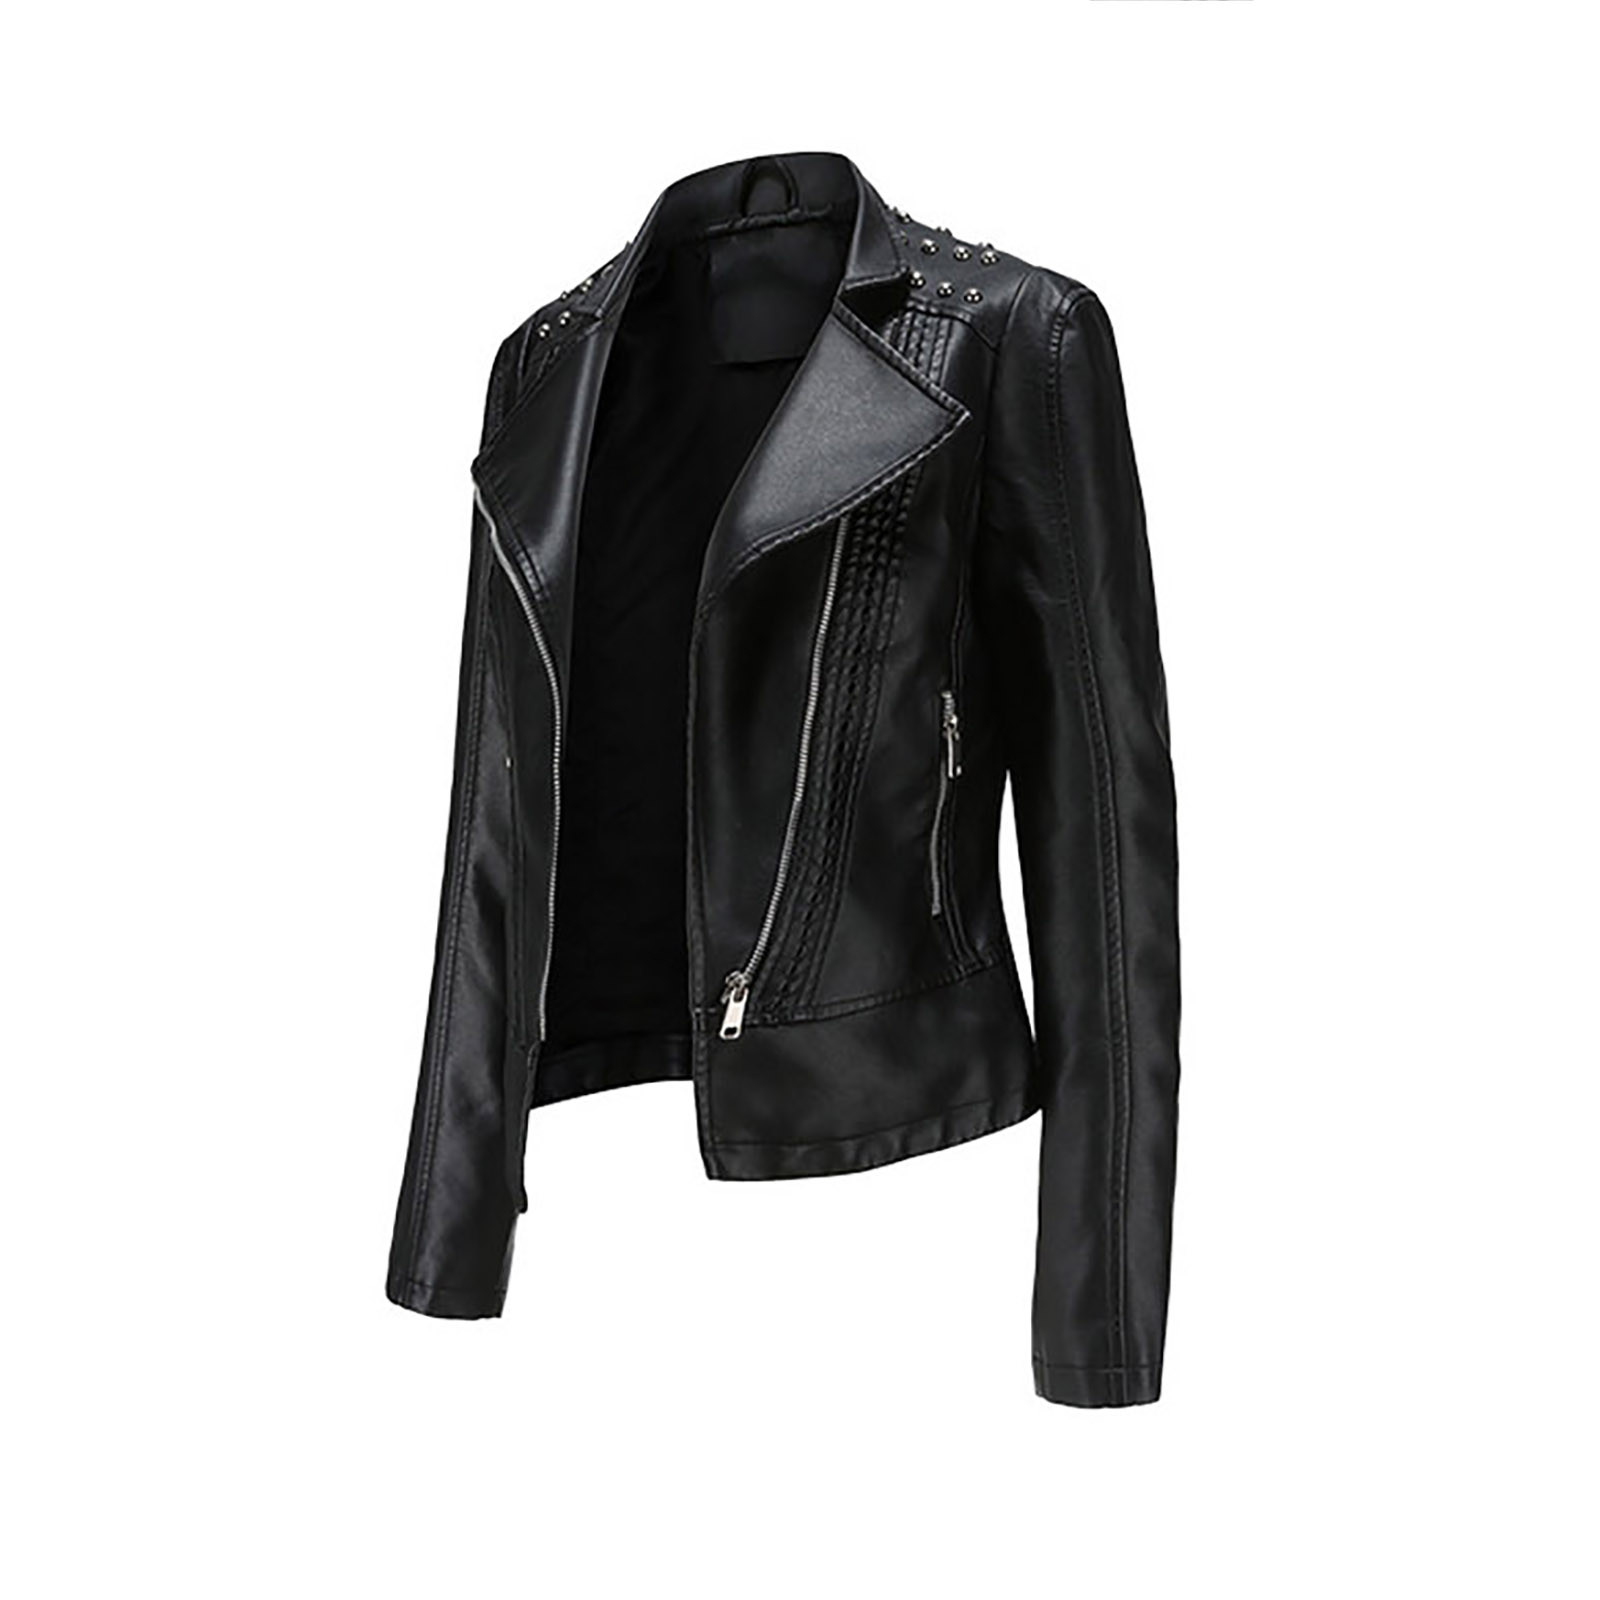 Leather Jacket for Women Fashion Faux Leather Zipper Motorcycle Jacket Plus Size Leather Tops Moto Biker Short - image 5 of 7